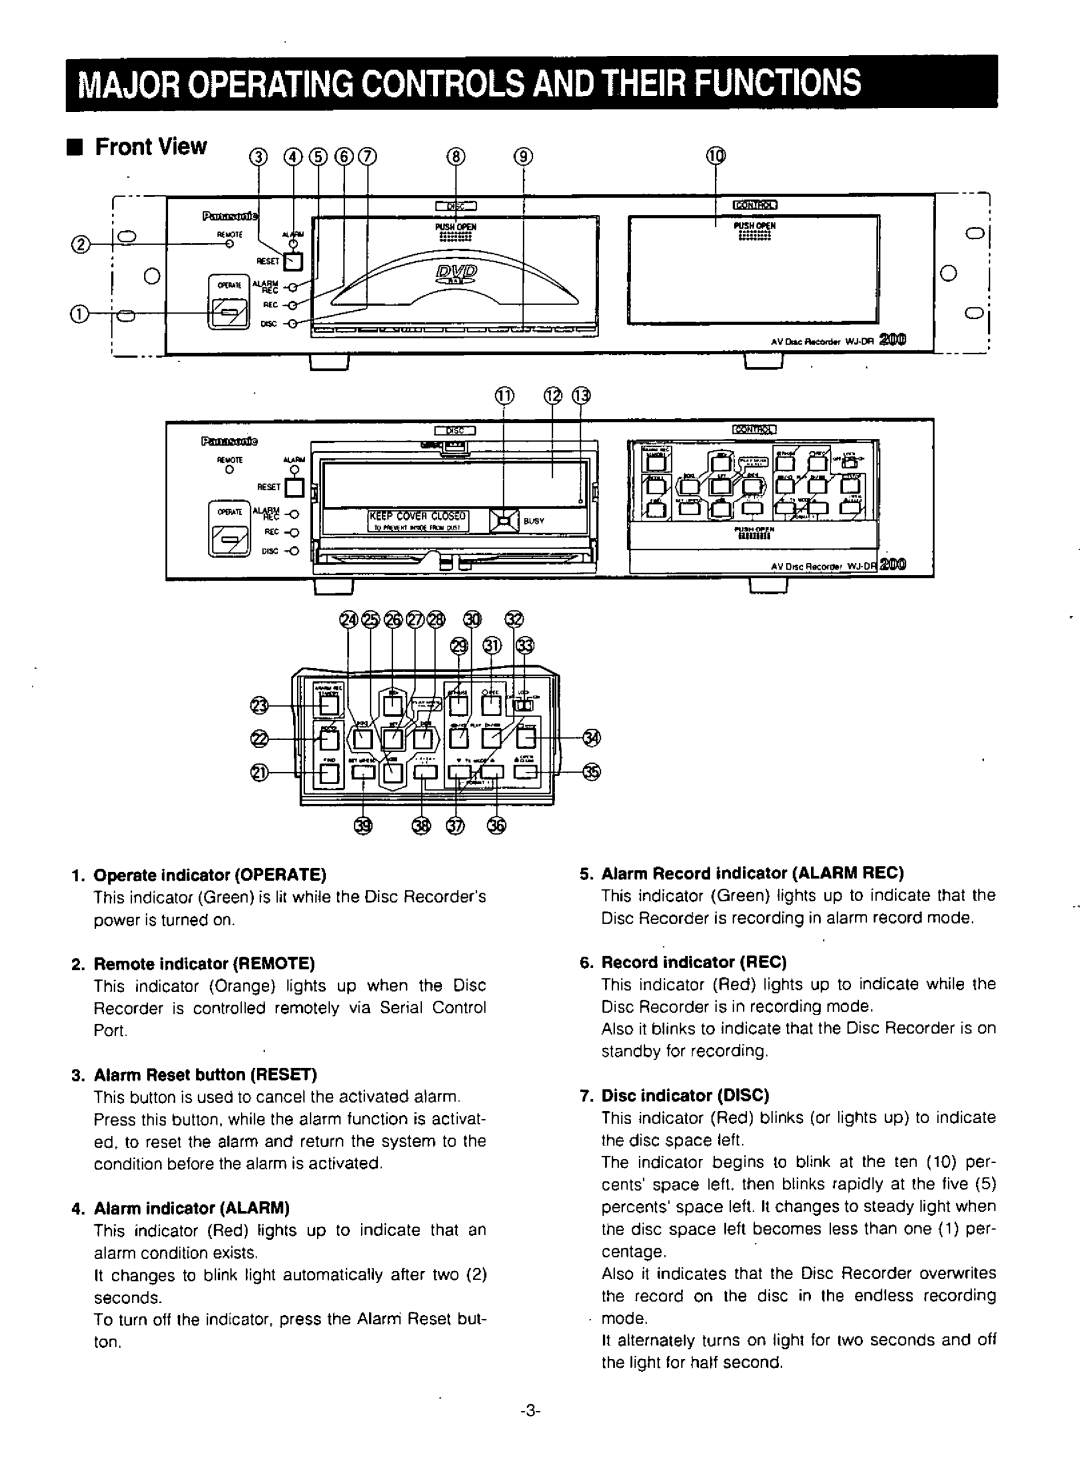 Panasonic WJ-DR200 manual 